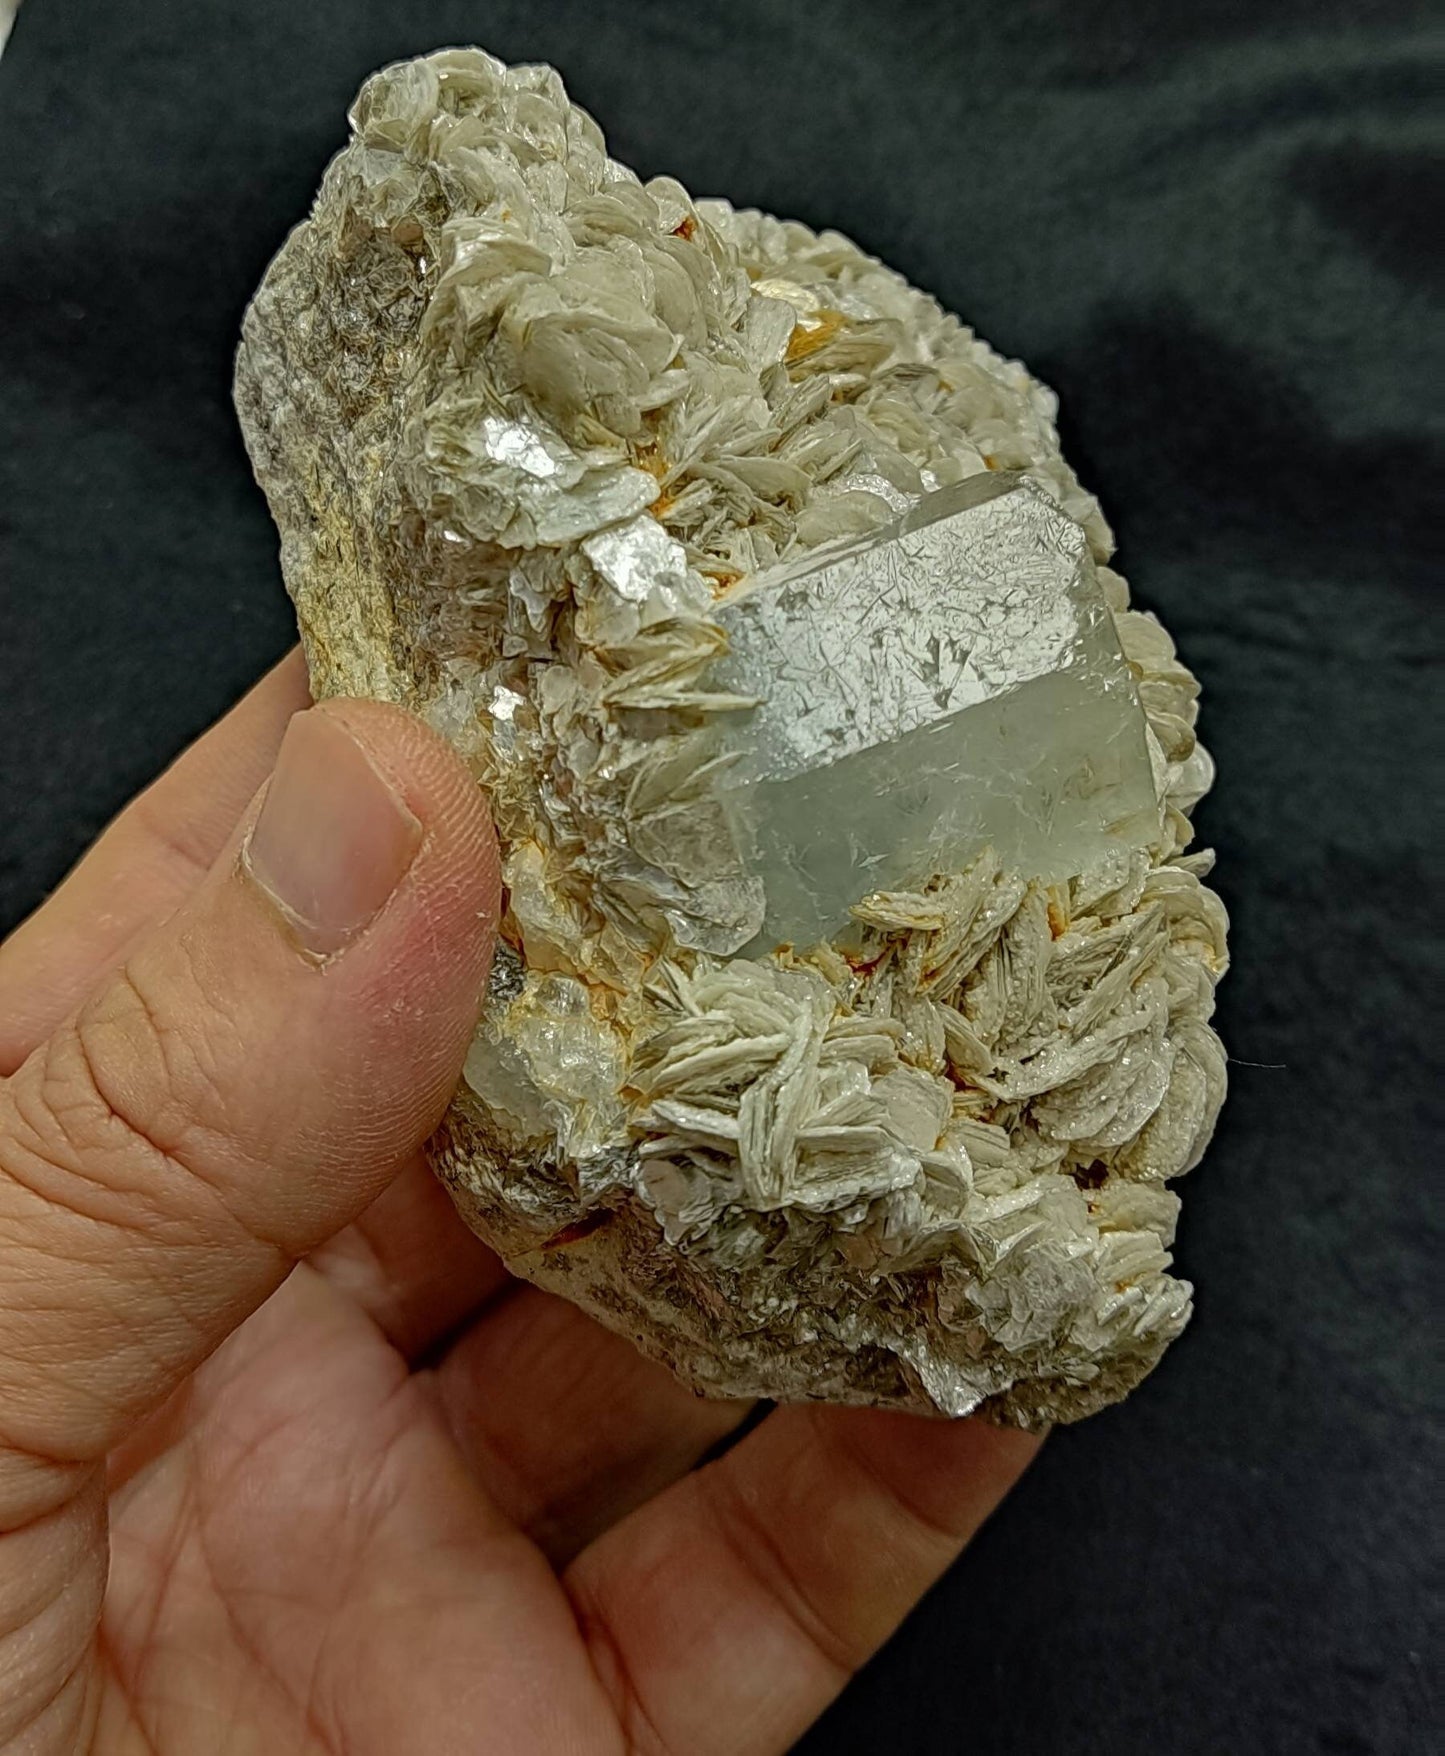 Heart shape Aquamarine crystal embedded in Muscovite self standing 495 grams